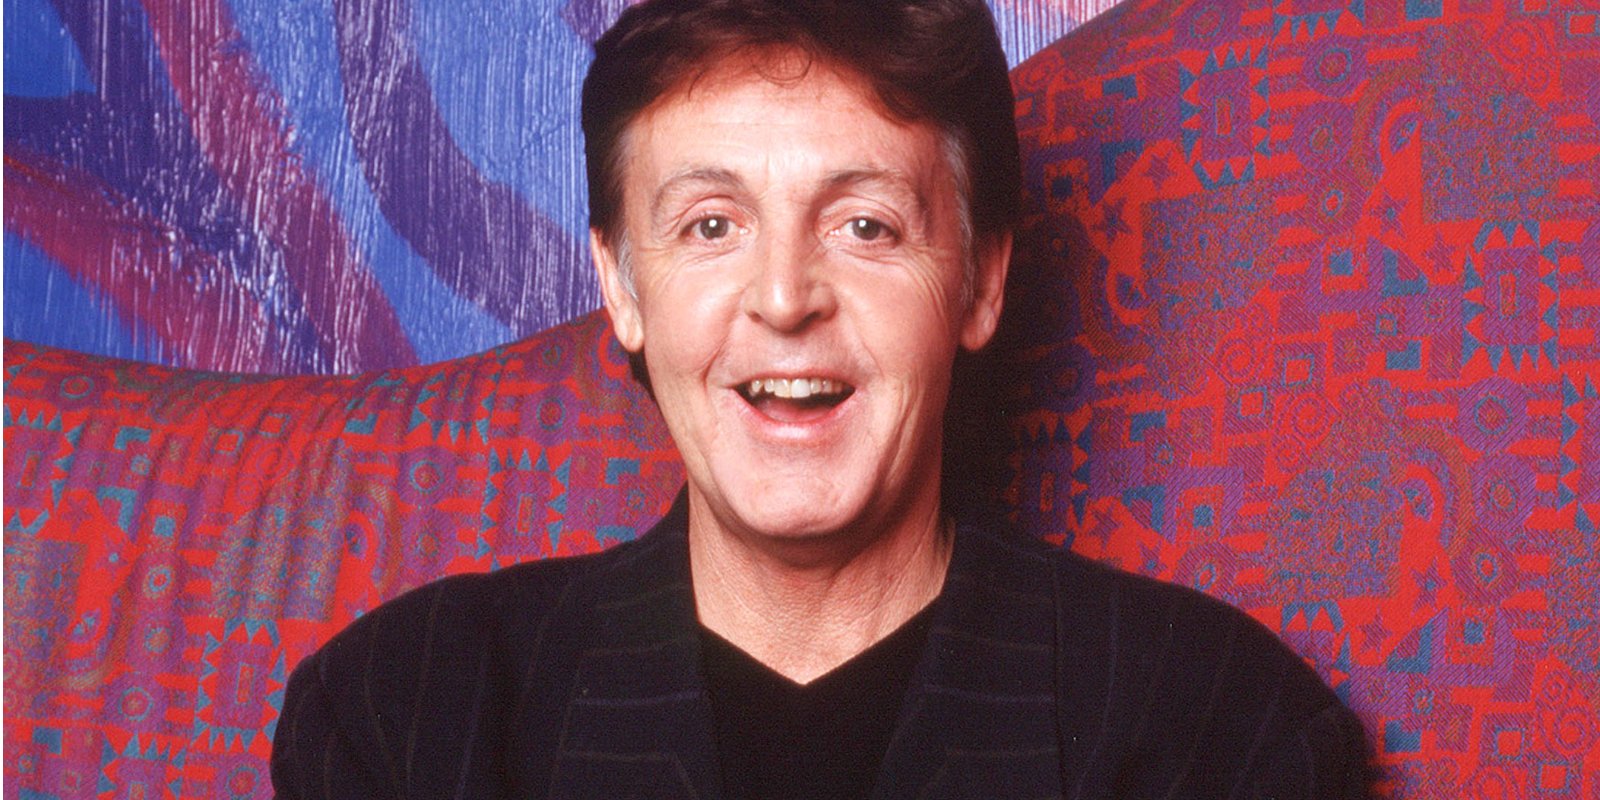 Singer Paul McCartney poses at the launch his new album 'Run Devil Run' at the Equinox in London.